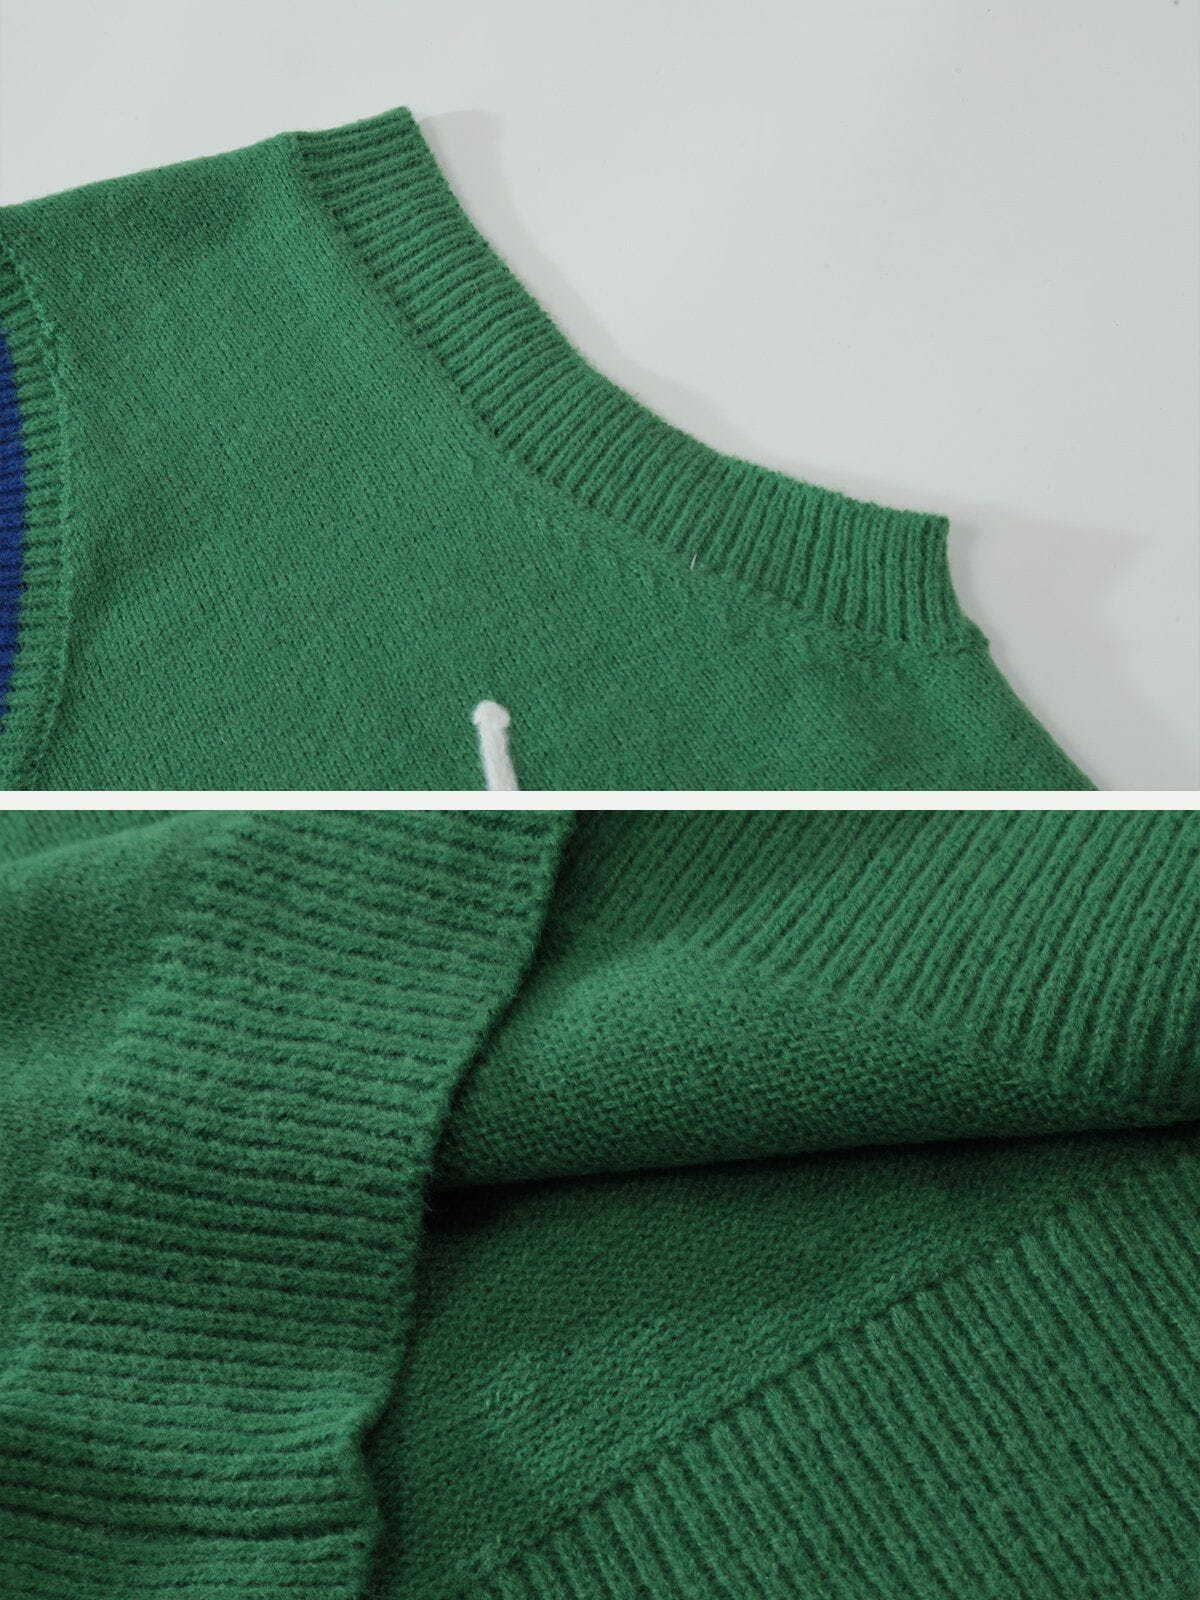 colorblock letter sweater vest edgy & vibrant streetwear 6880